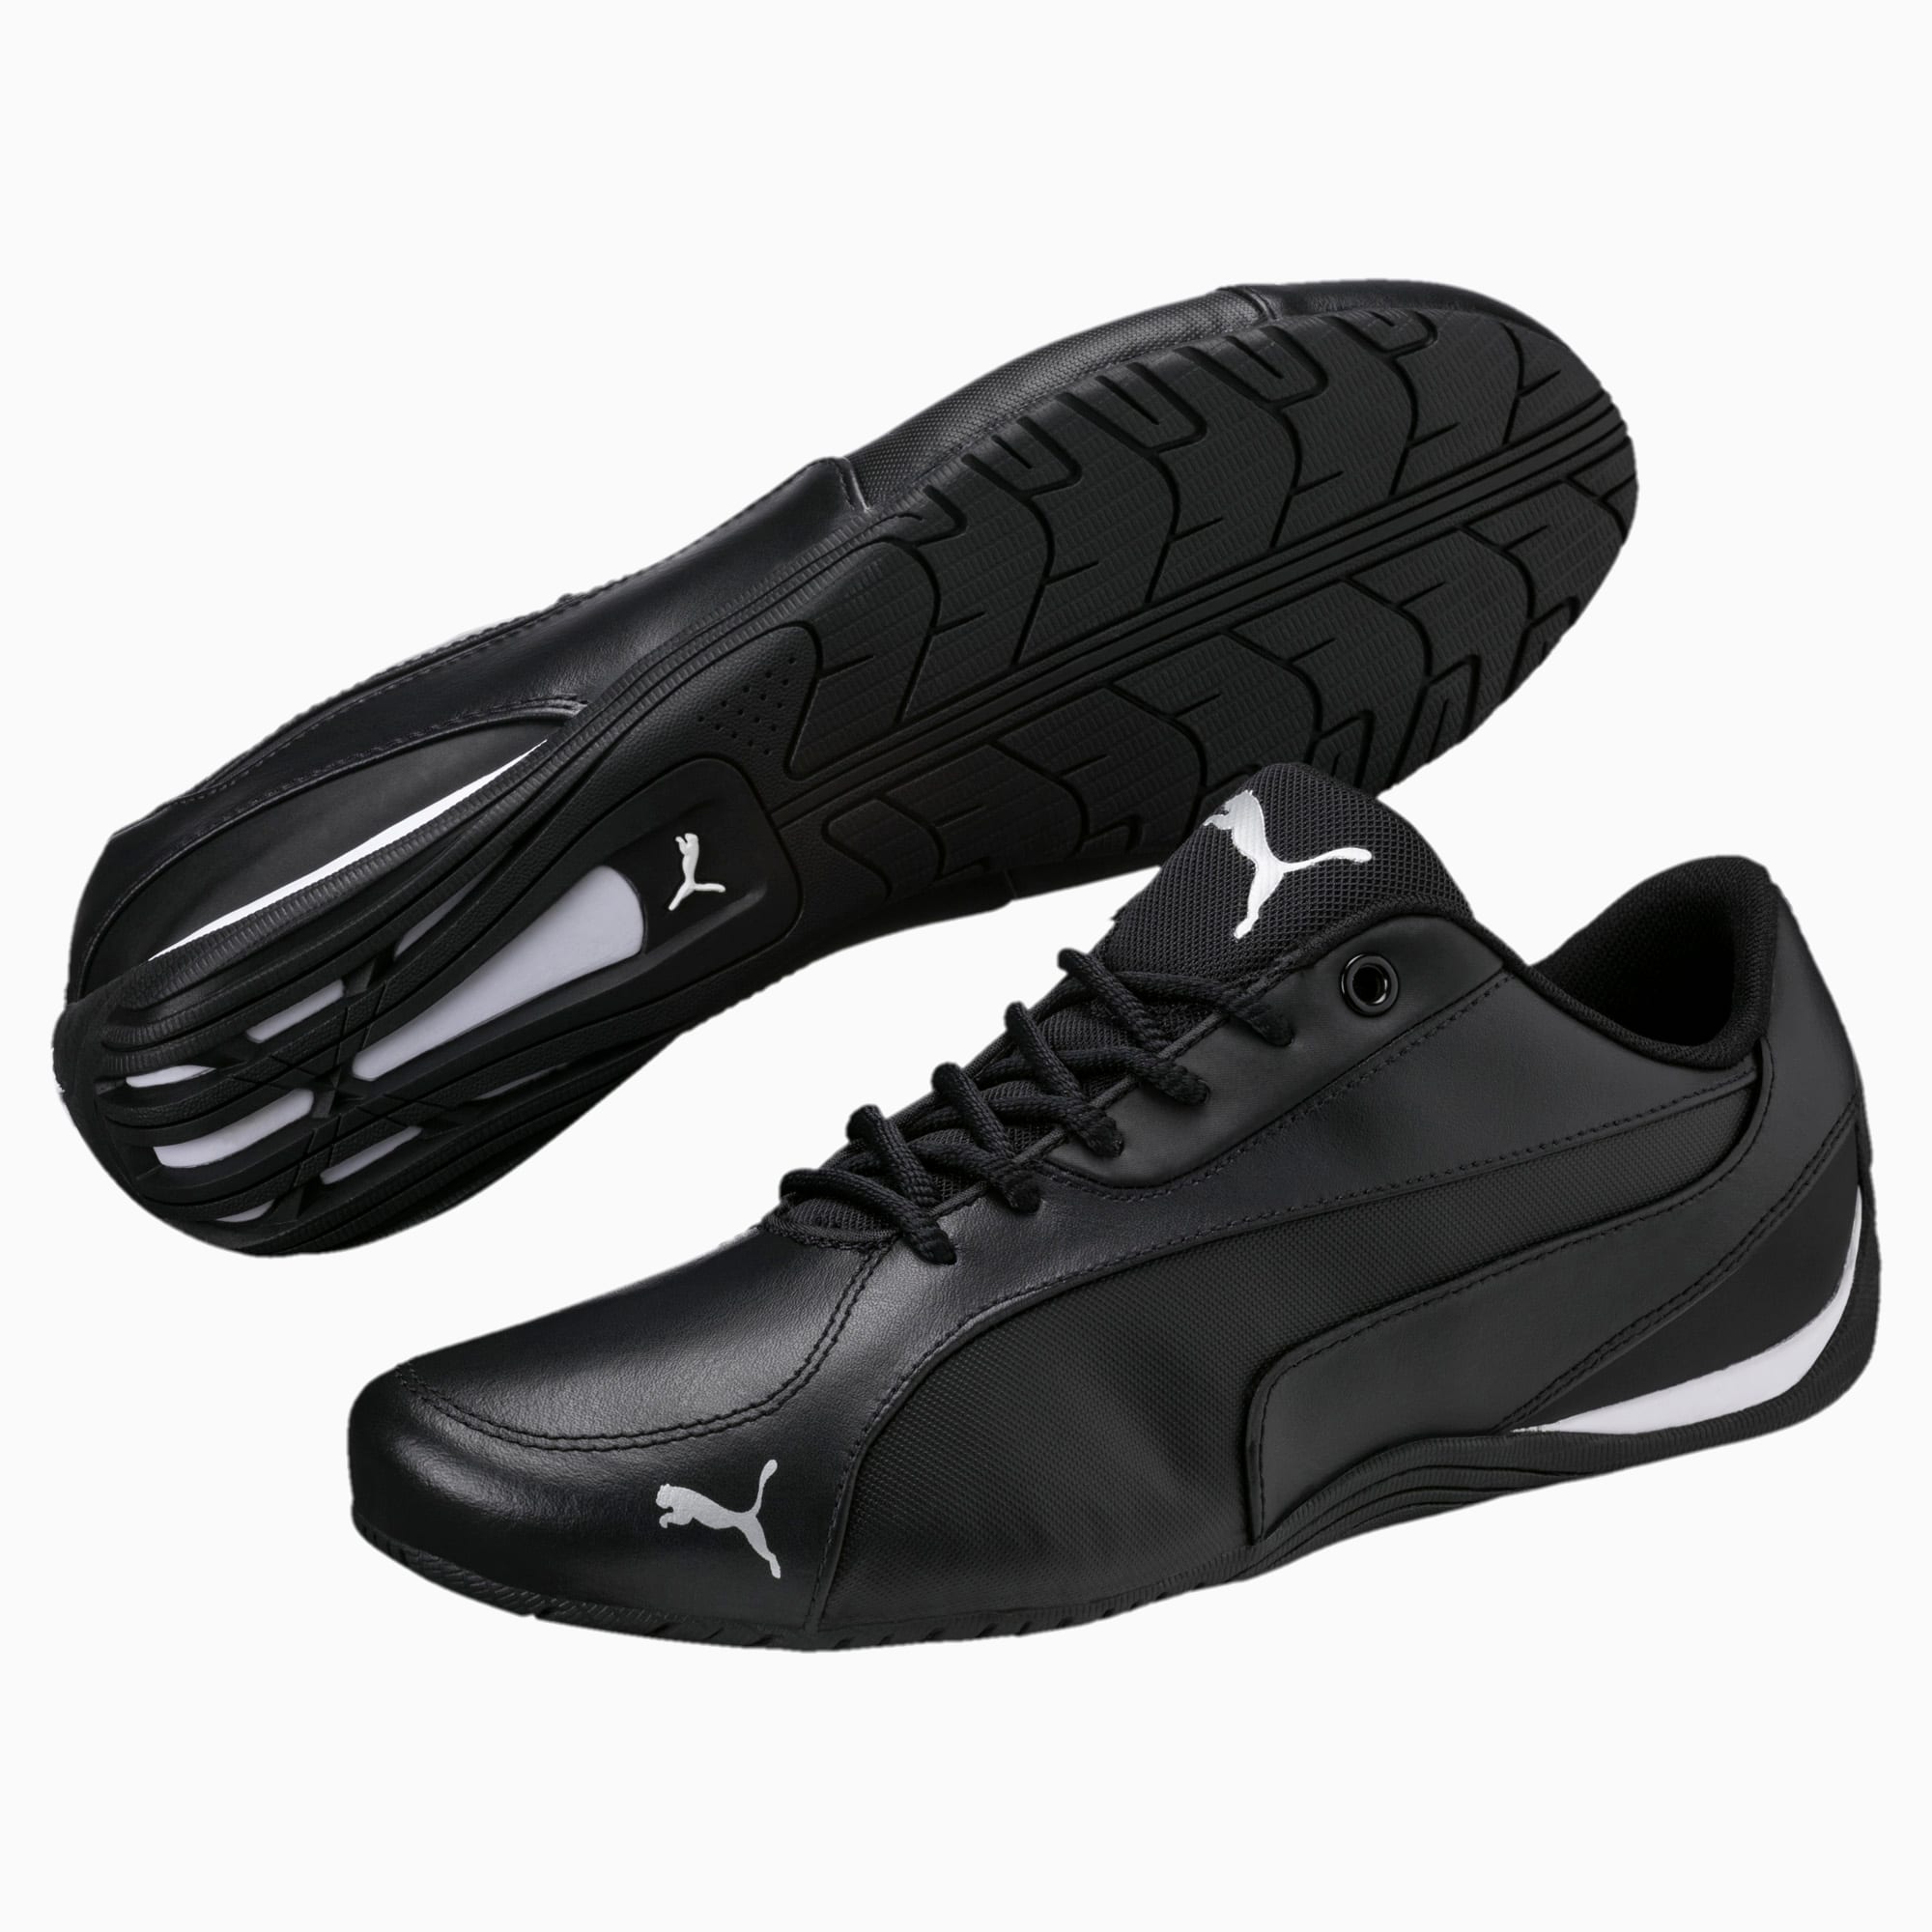 puma drift cat 5 core black sneakers